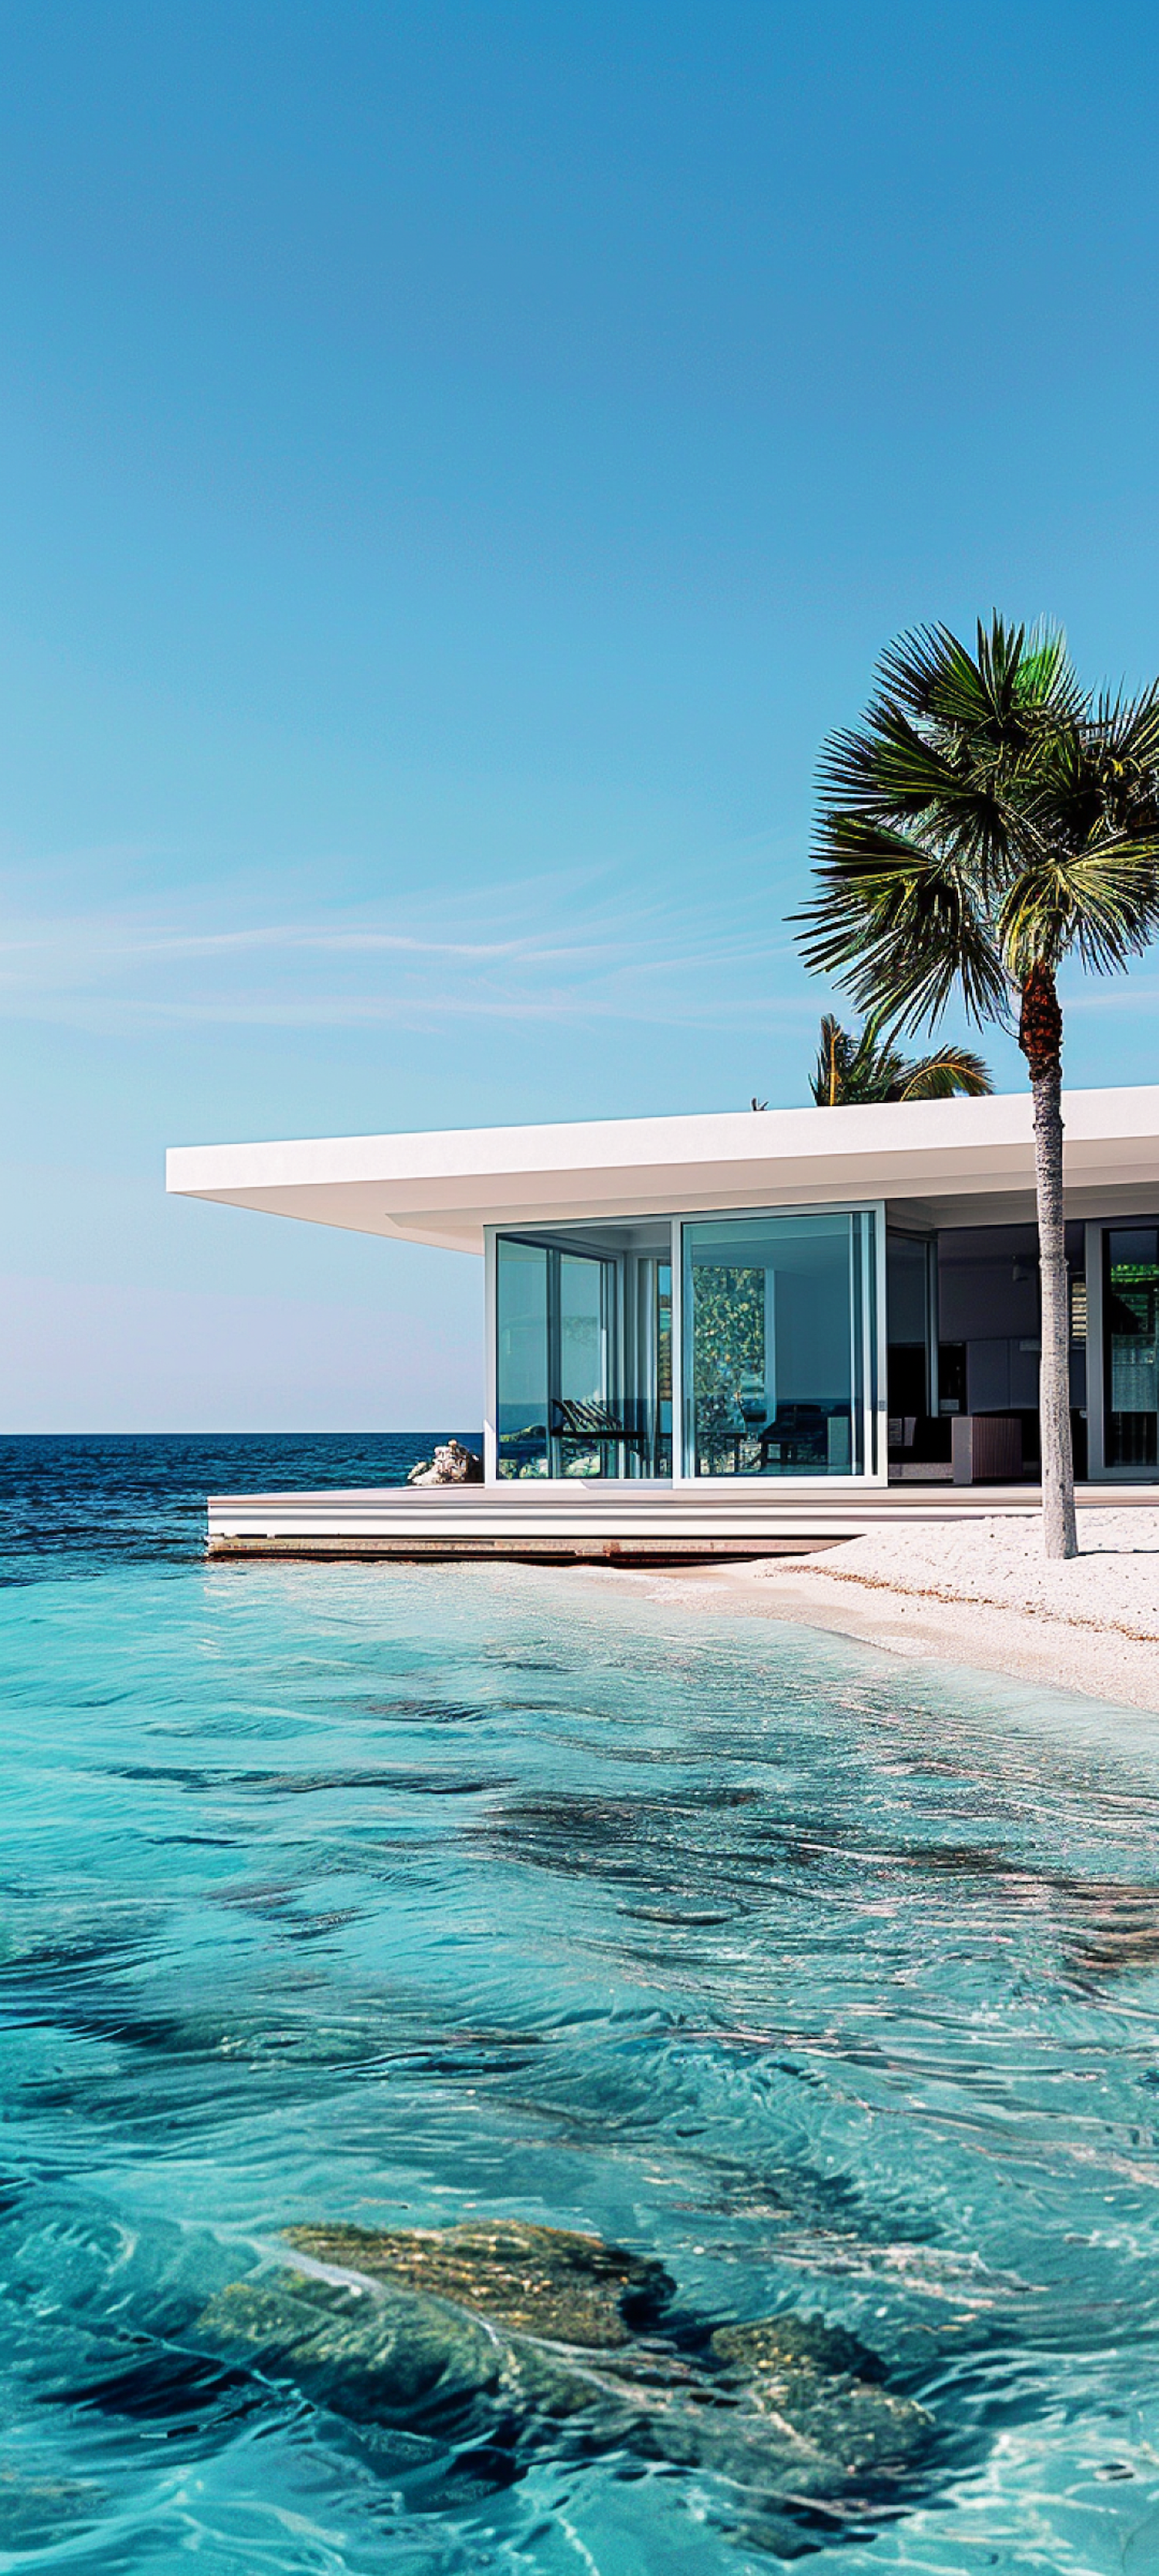 Modern Beach House with Tropical Scenery